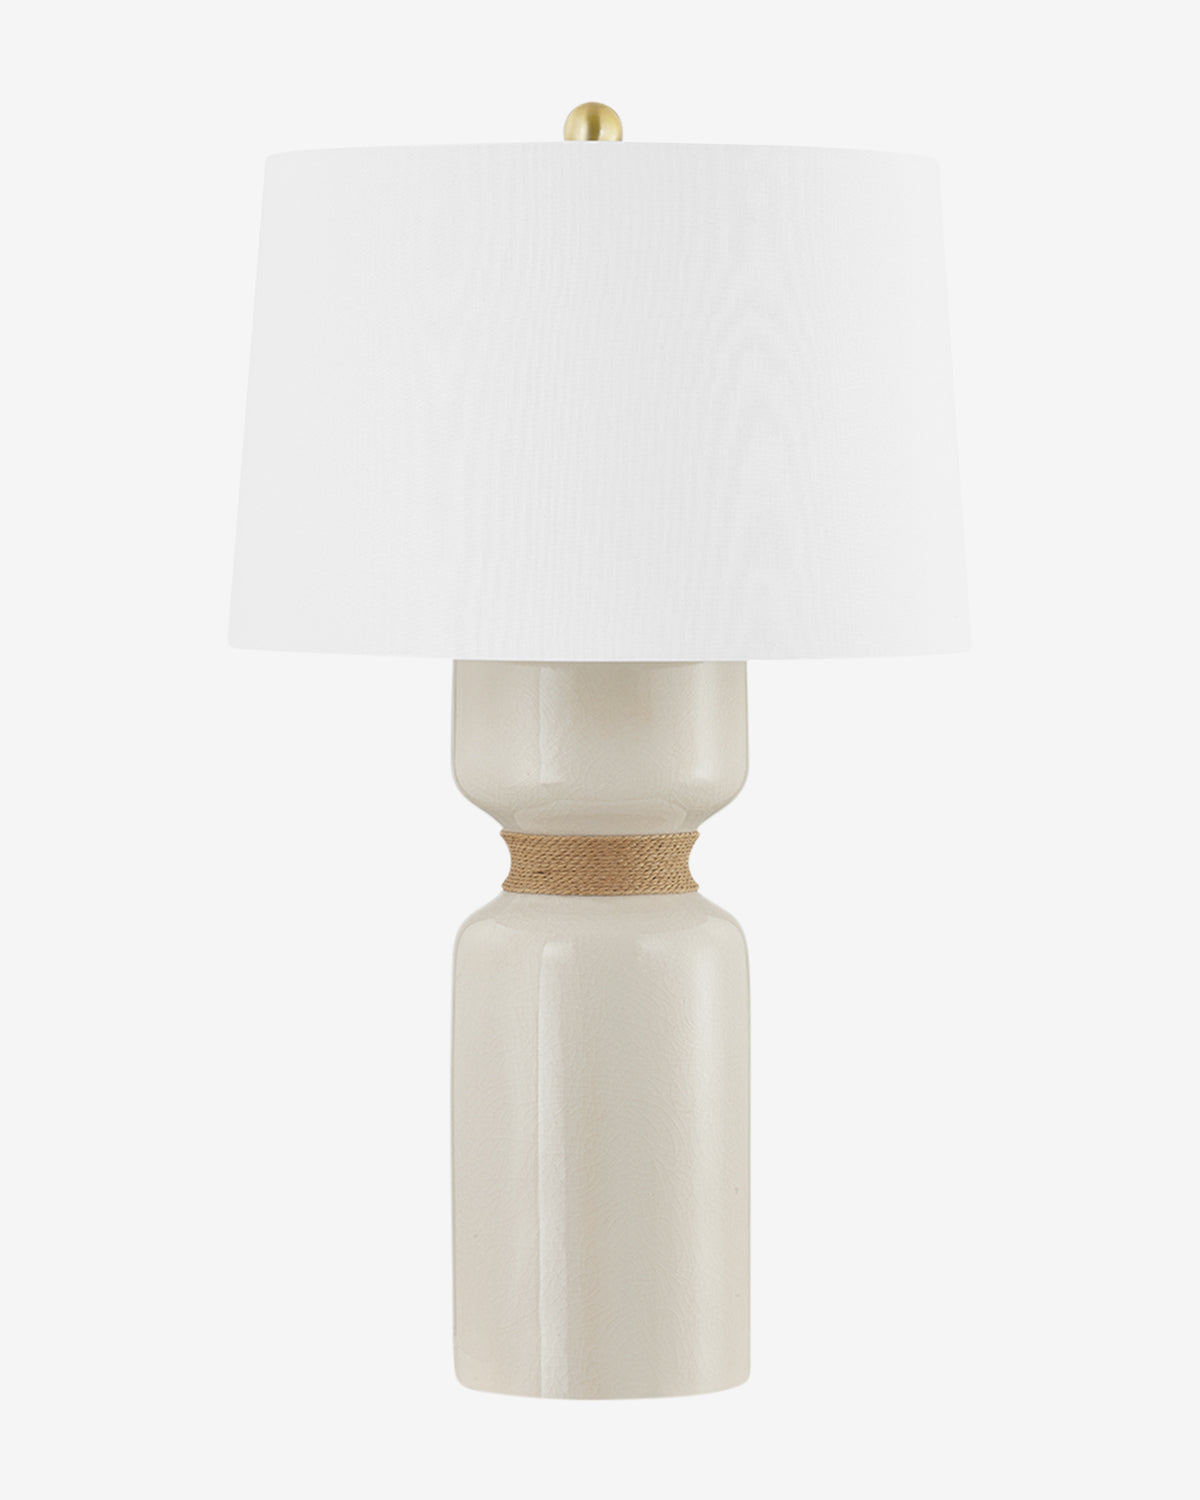 Hudson Valley Lighting, Mindy Table Lamp